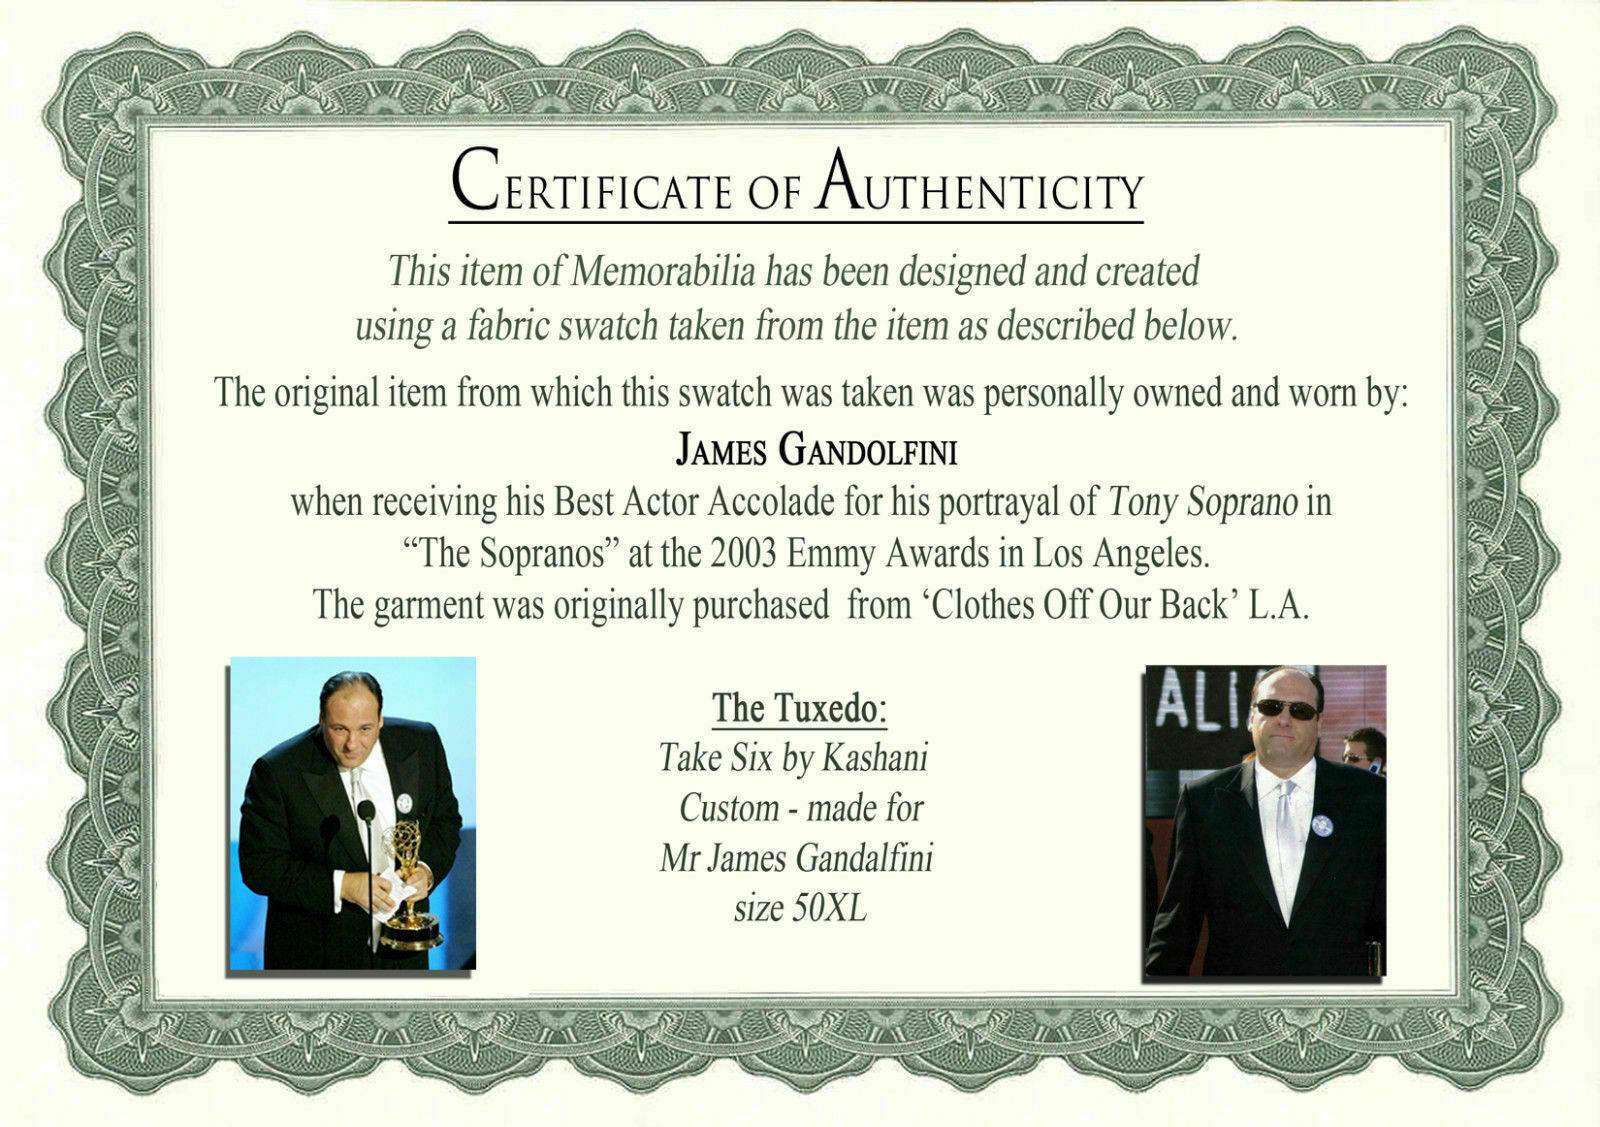 The Sopranos Tuxedo Owned & Worn By James Gandolfini At The 55th Emmys Awards - Image 2 of 3